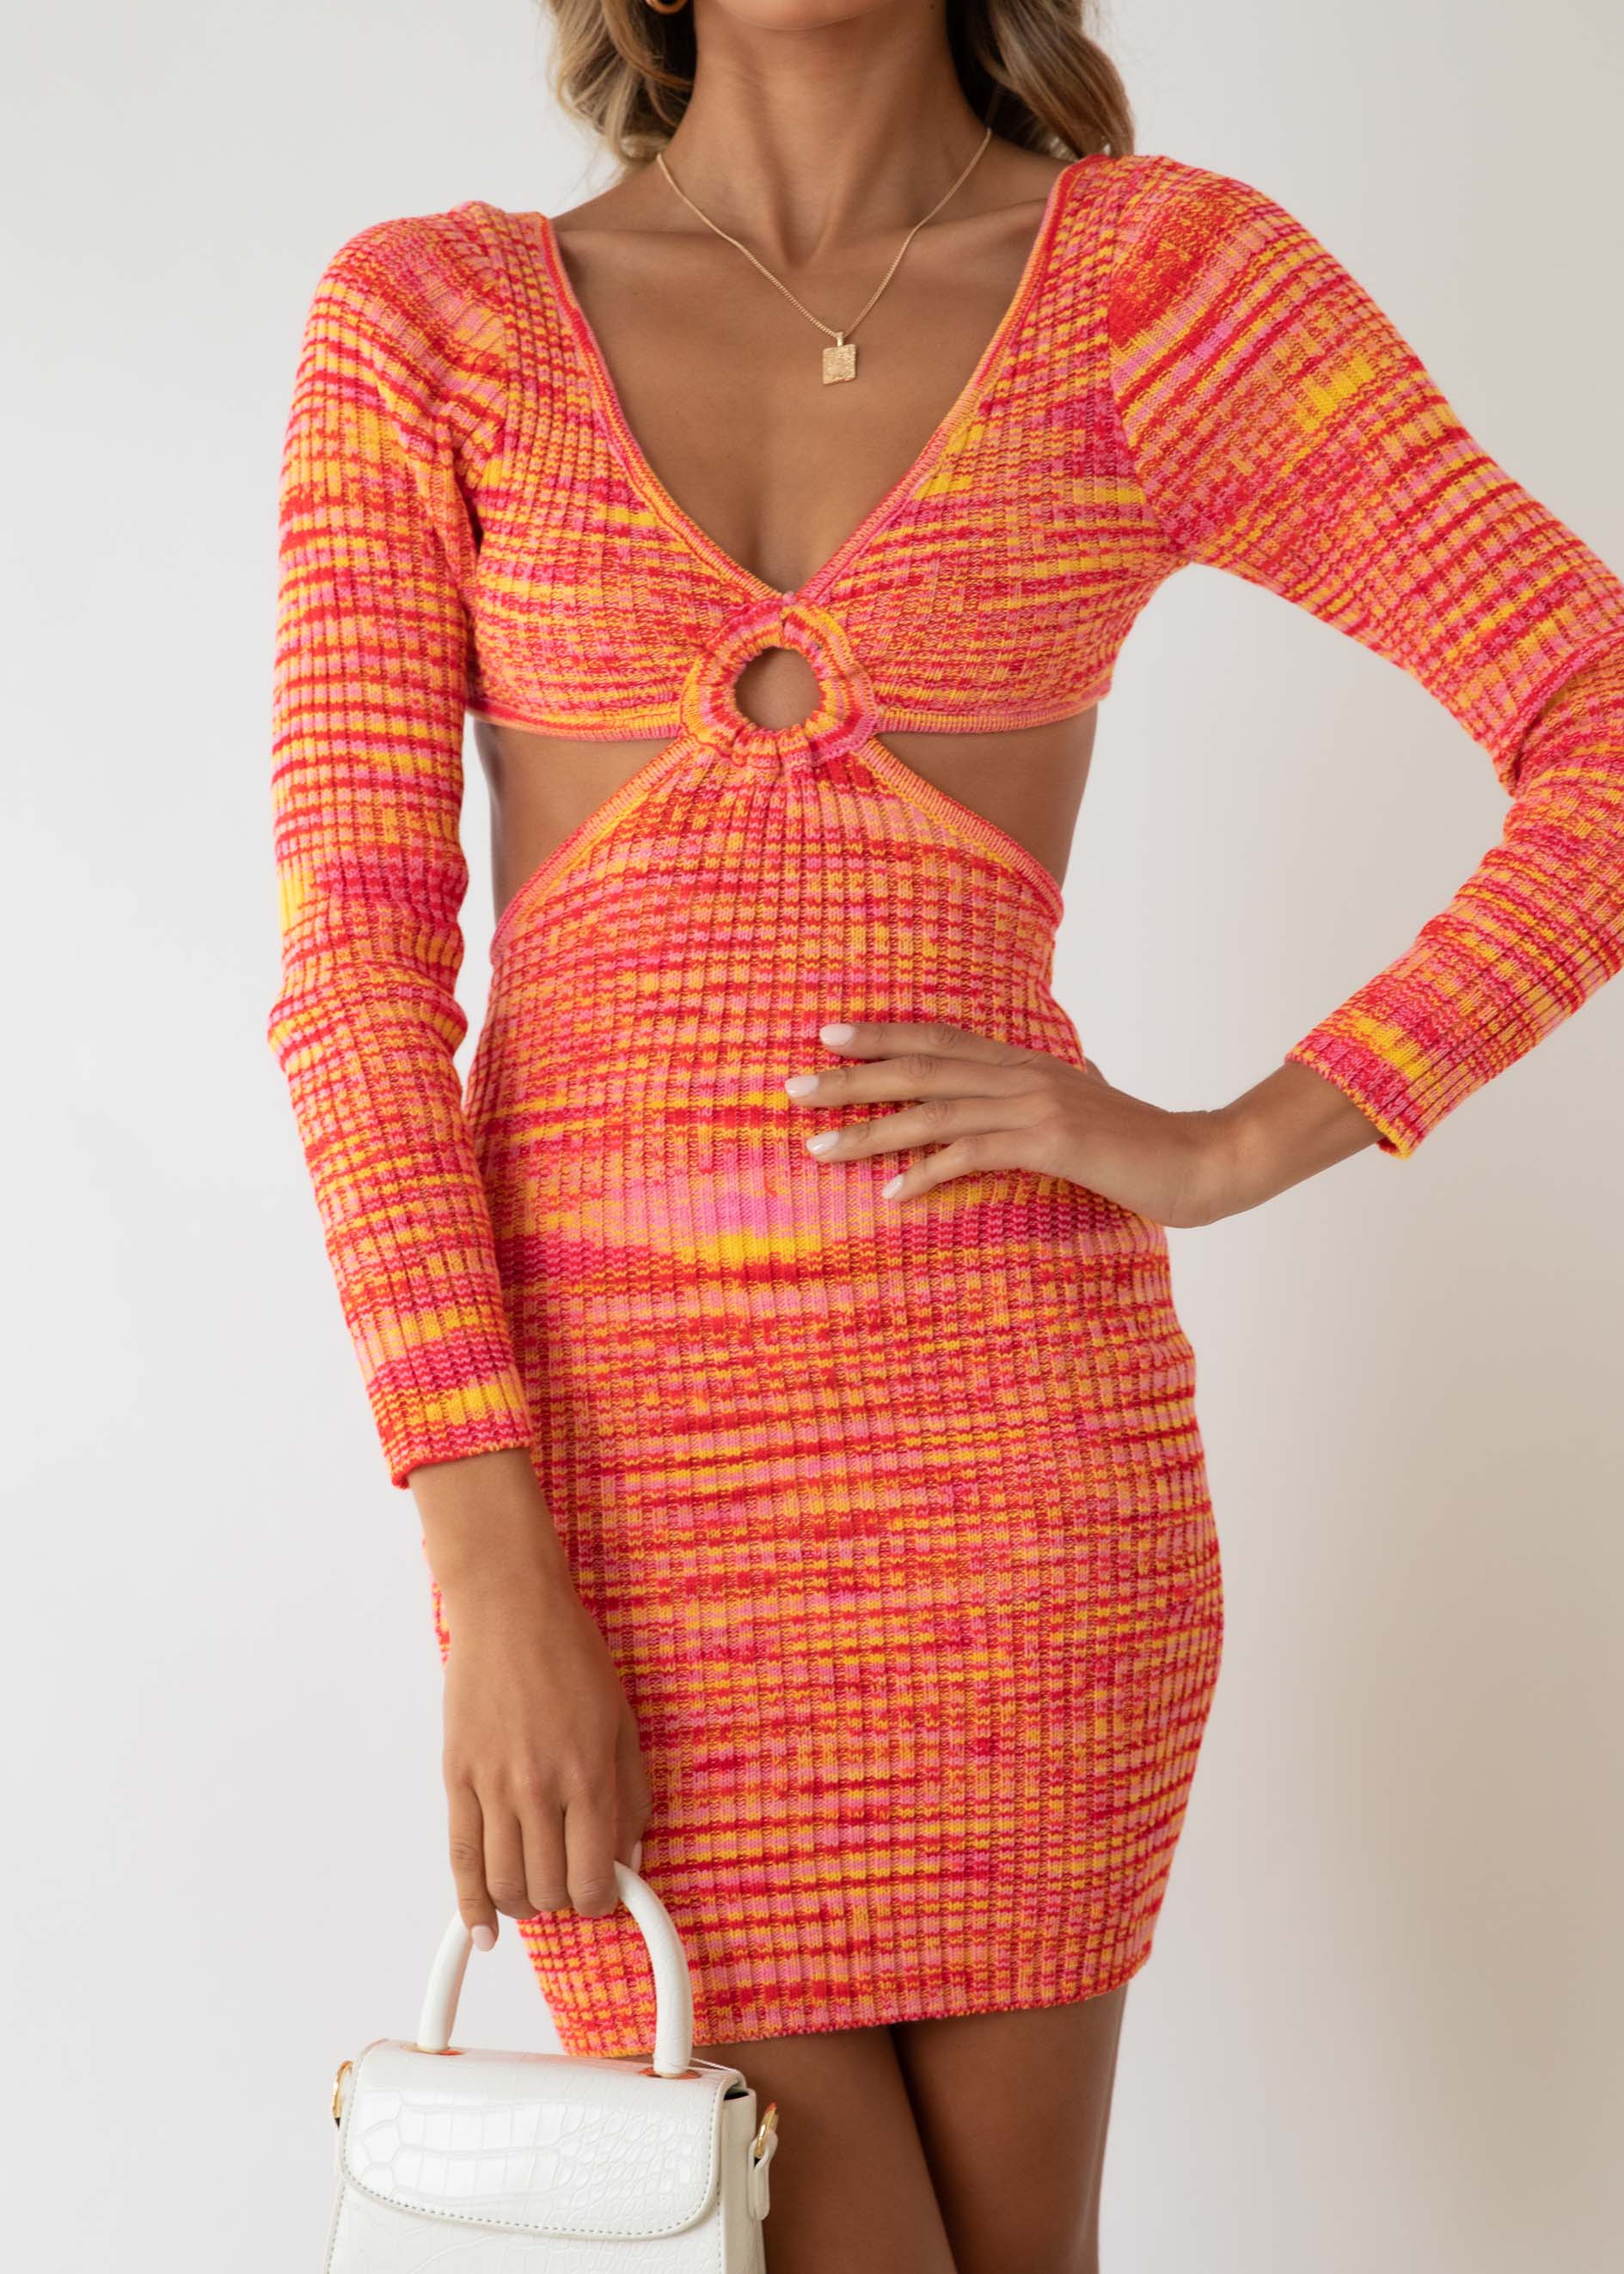 Saga Cut Out Knit Dress - Orange